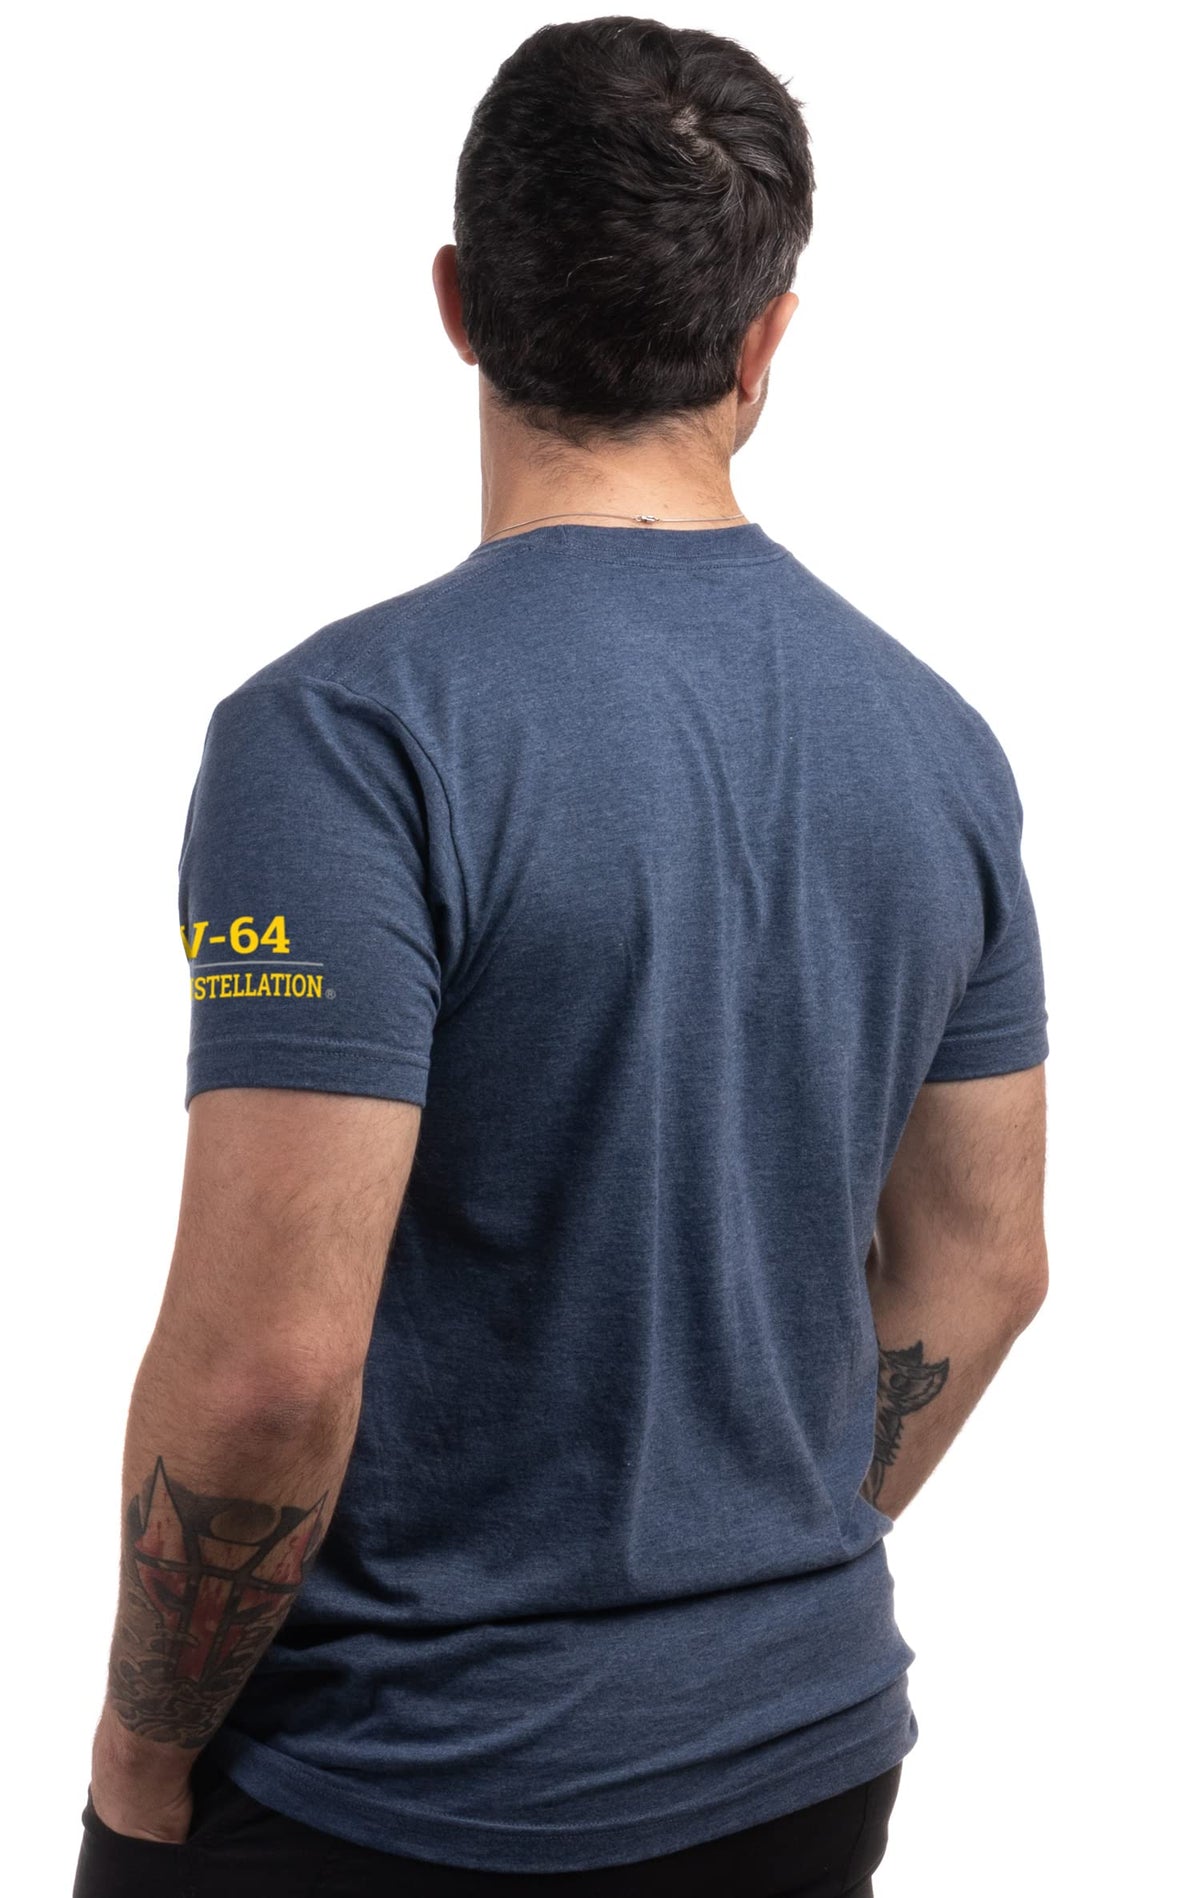 USS Constellation, CV-64 | U.S. Navy Sailor Veteran USN United States Naval T-shirt for Men Women